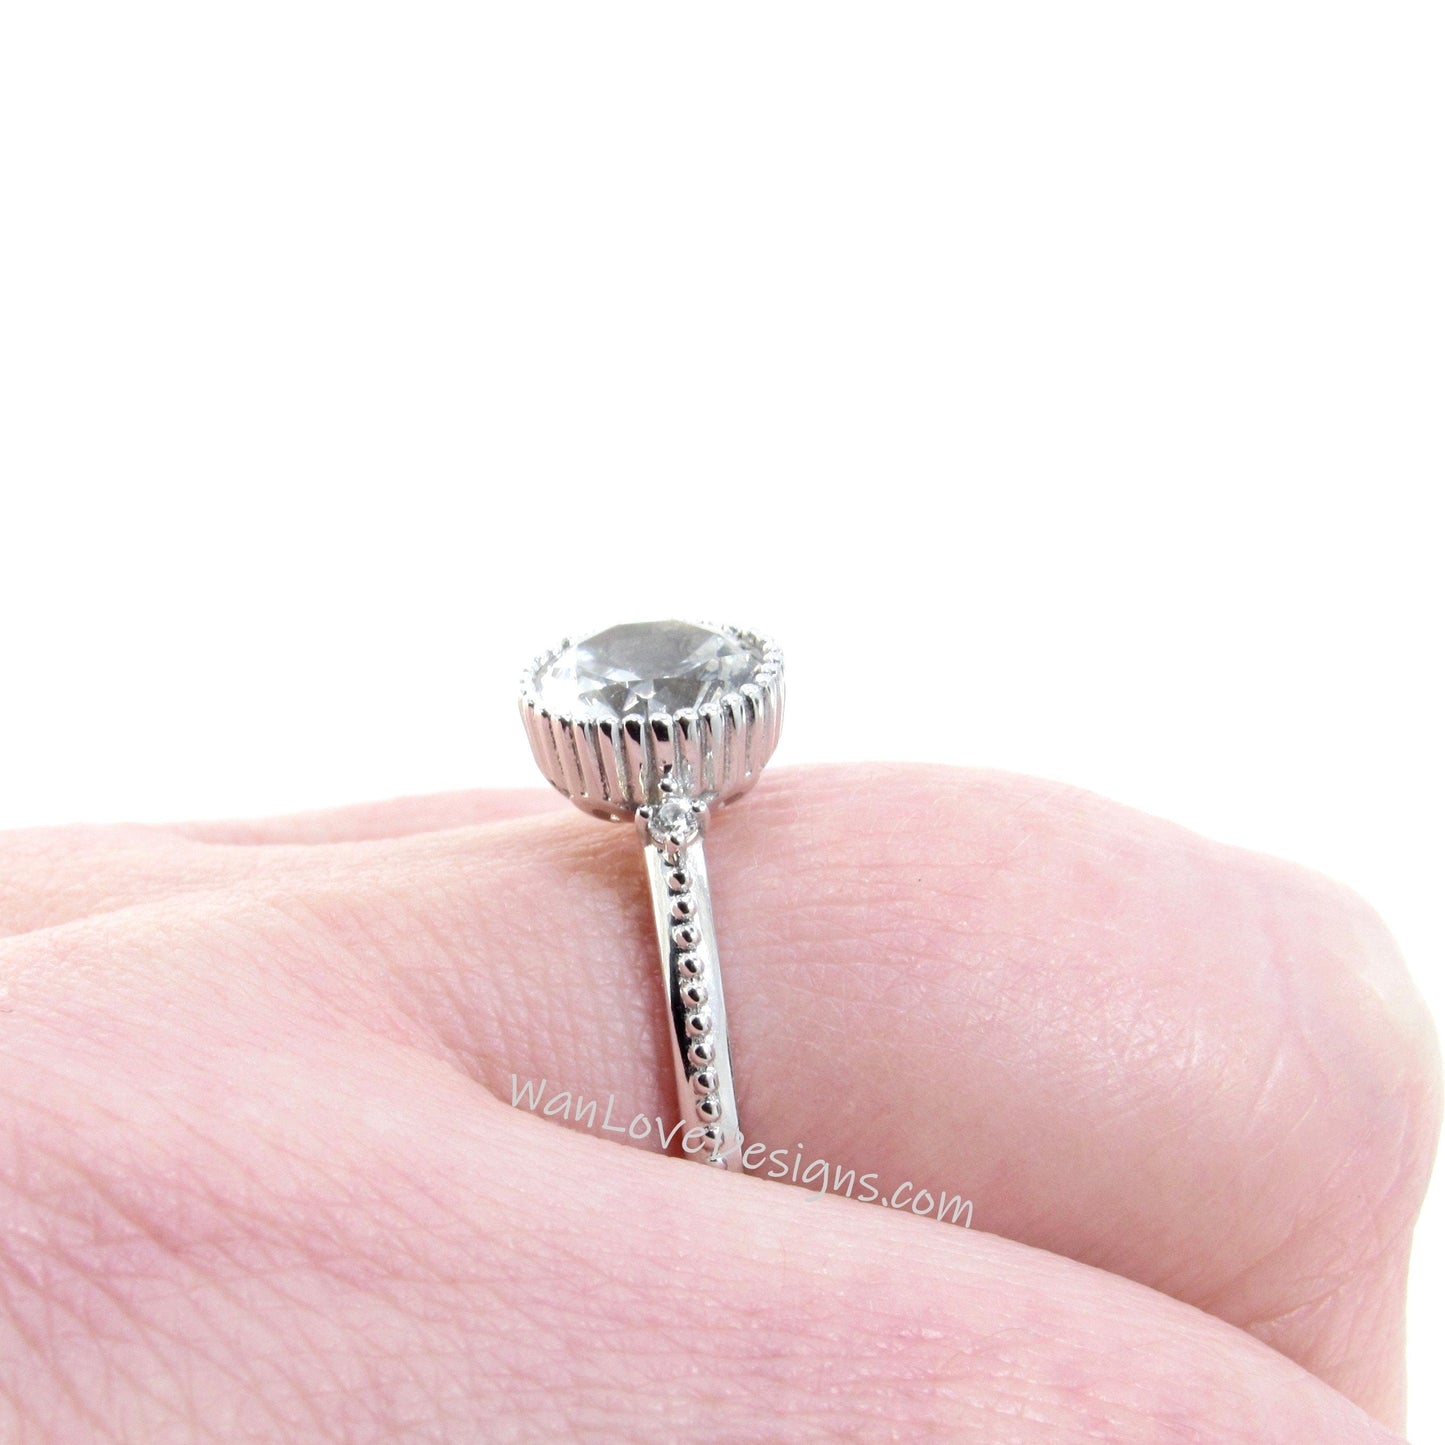 Milgrain Bezel Ring Blue Moissanite & Diamond Round cut Engagement Ring Art Deco round bezel Ring wedding bridal promise ring anniversary Wan Love Designs